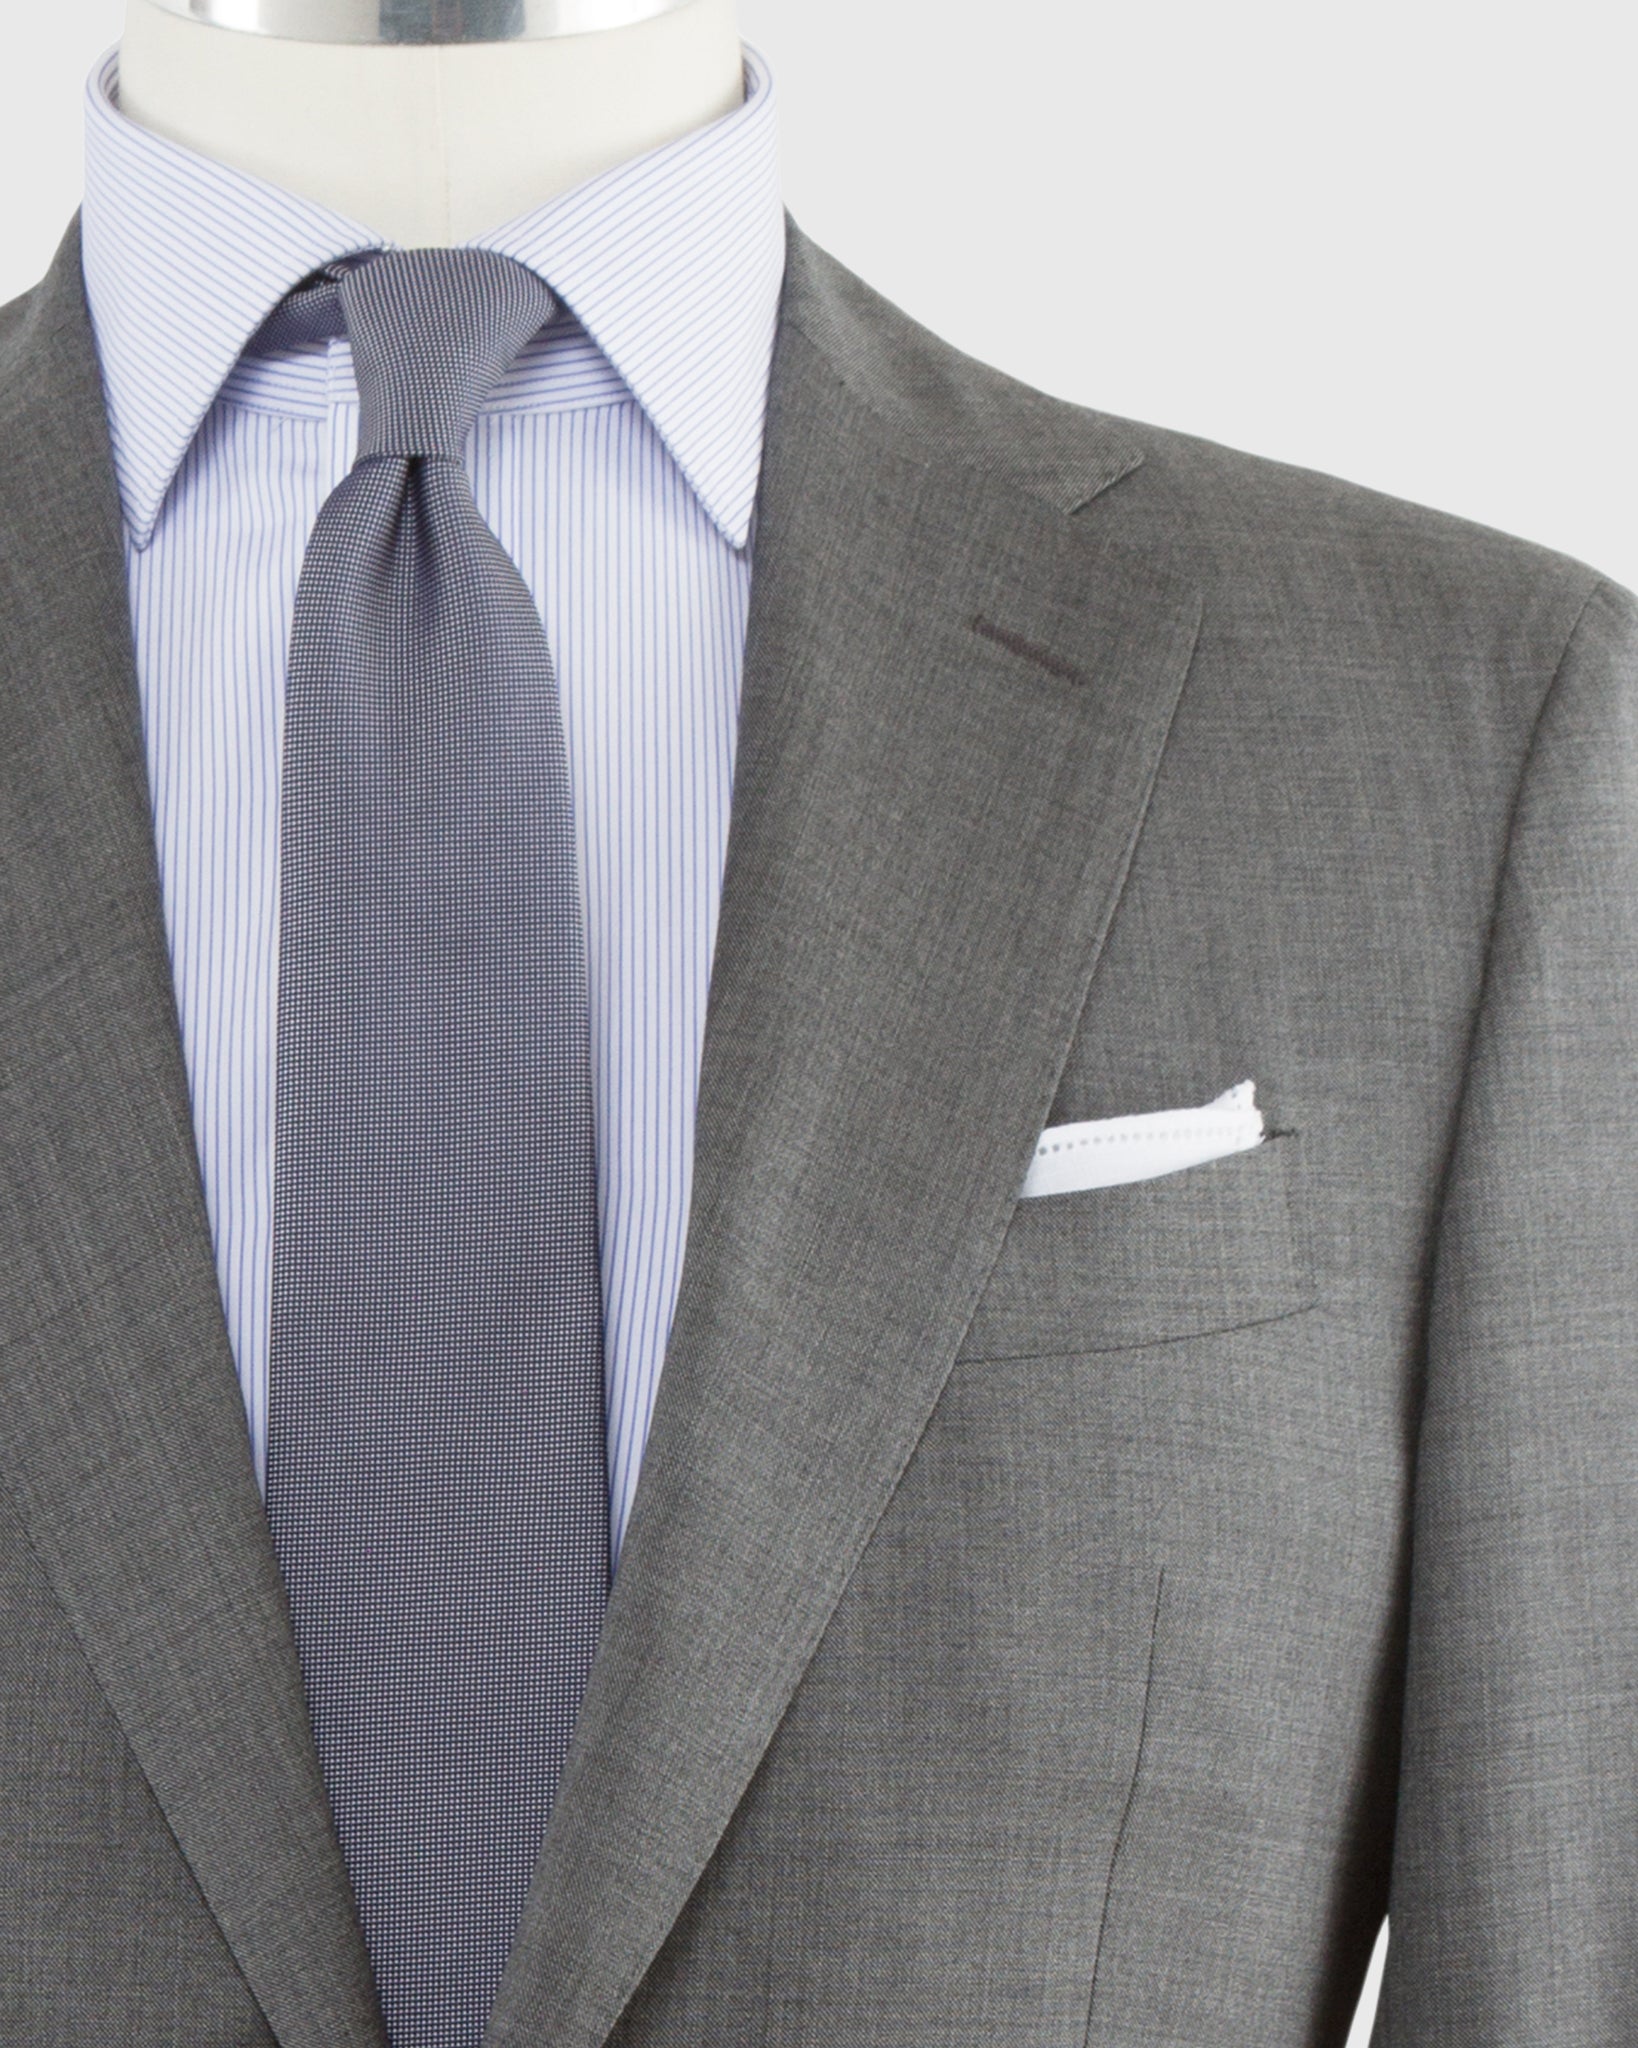 Kincaid No. 3 Suit in Oxford Grey Sharkskin - Ita 54R by Sid Mashburn